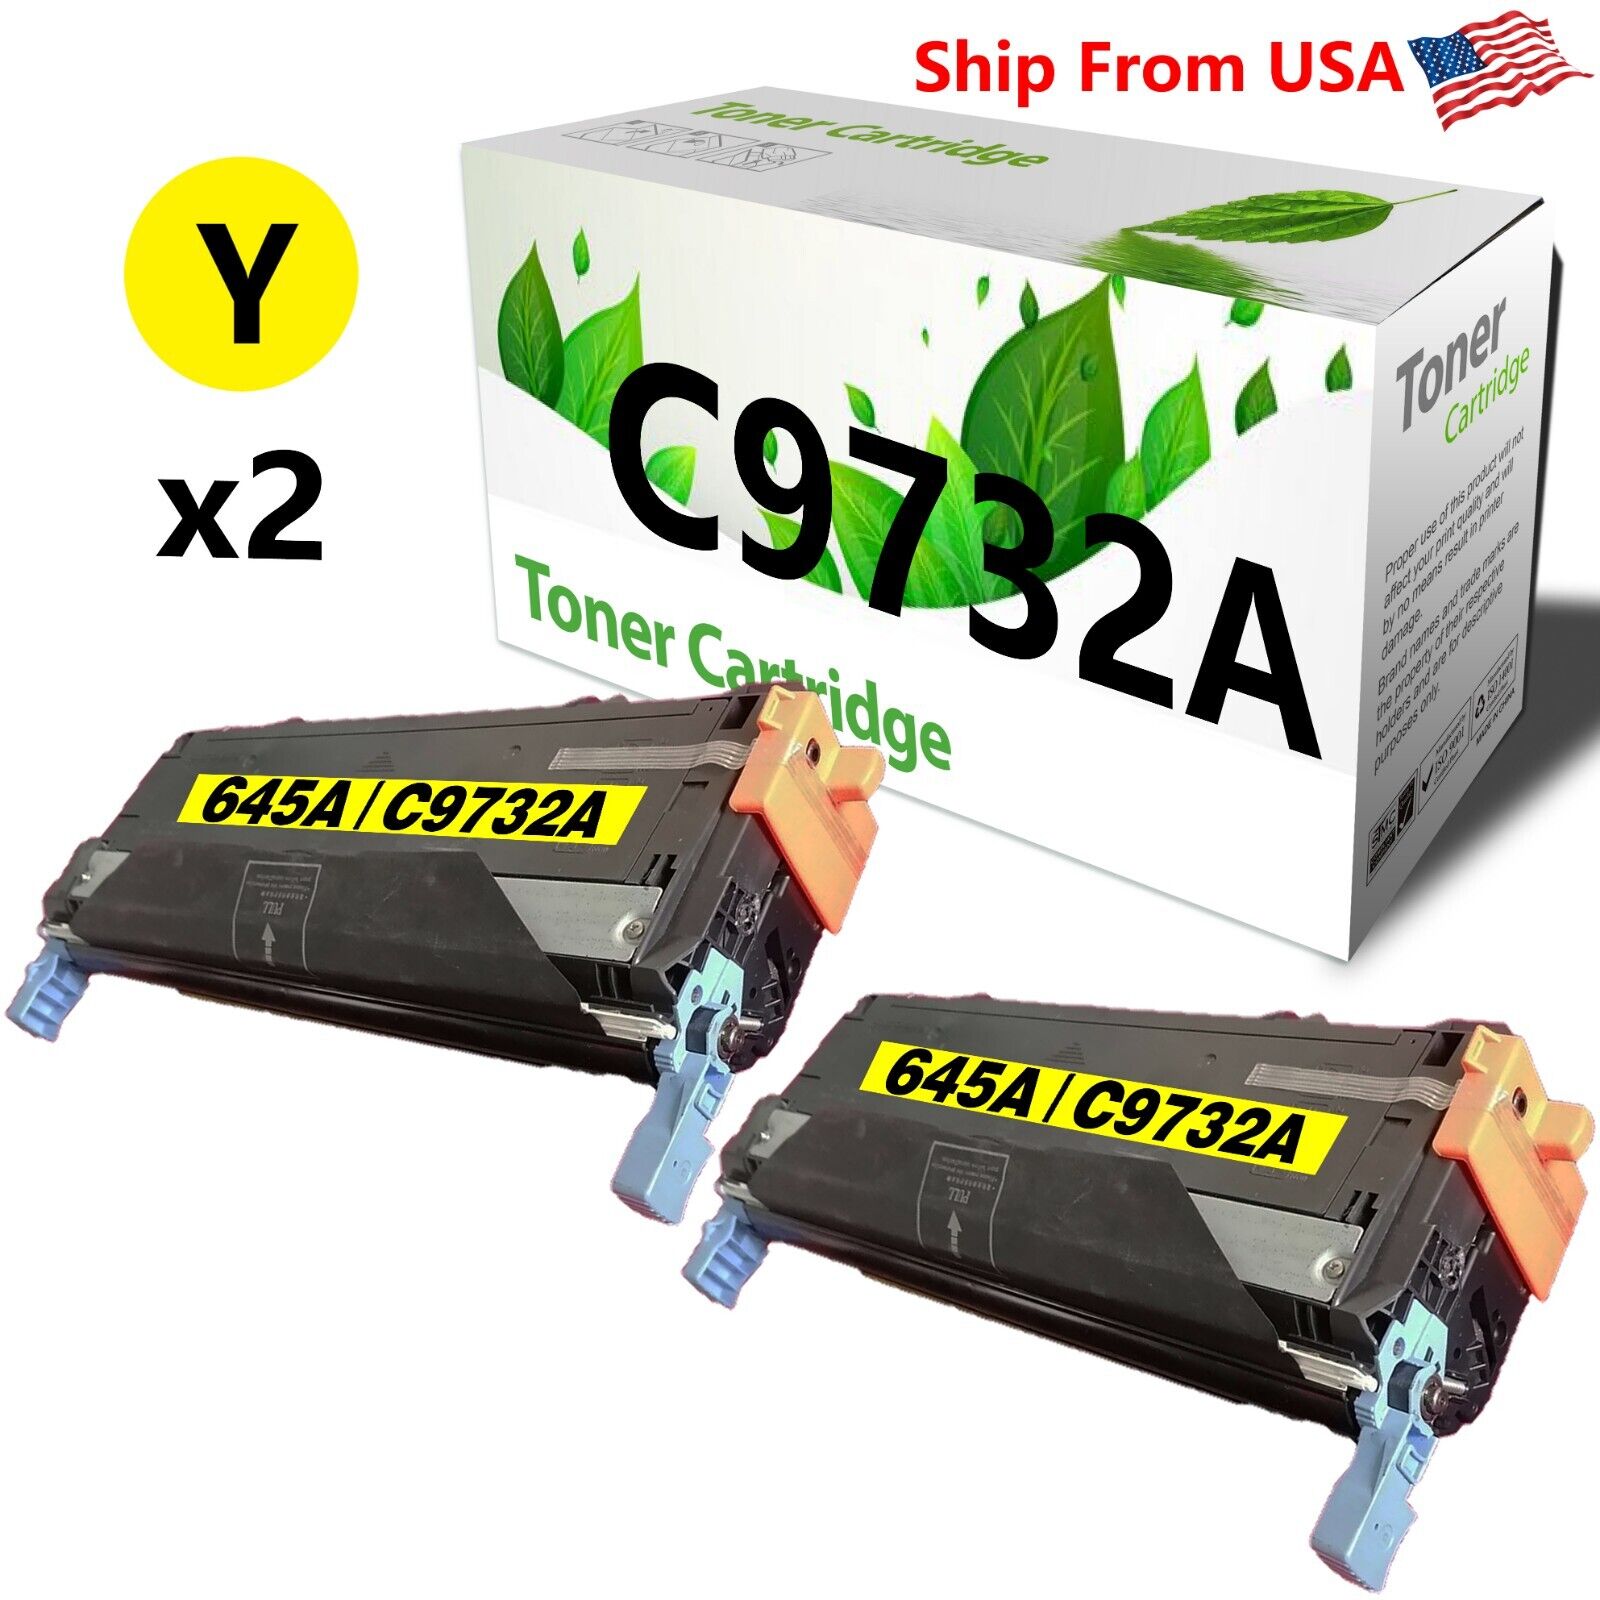 2PK C9732 645 Yellow Toner Cartridge For Color Laser Jet 5500n 5500dn 5550